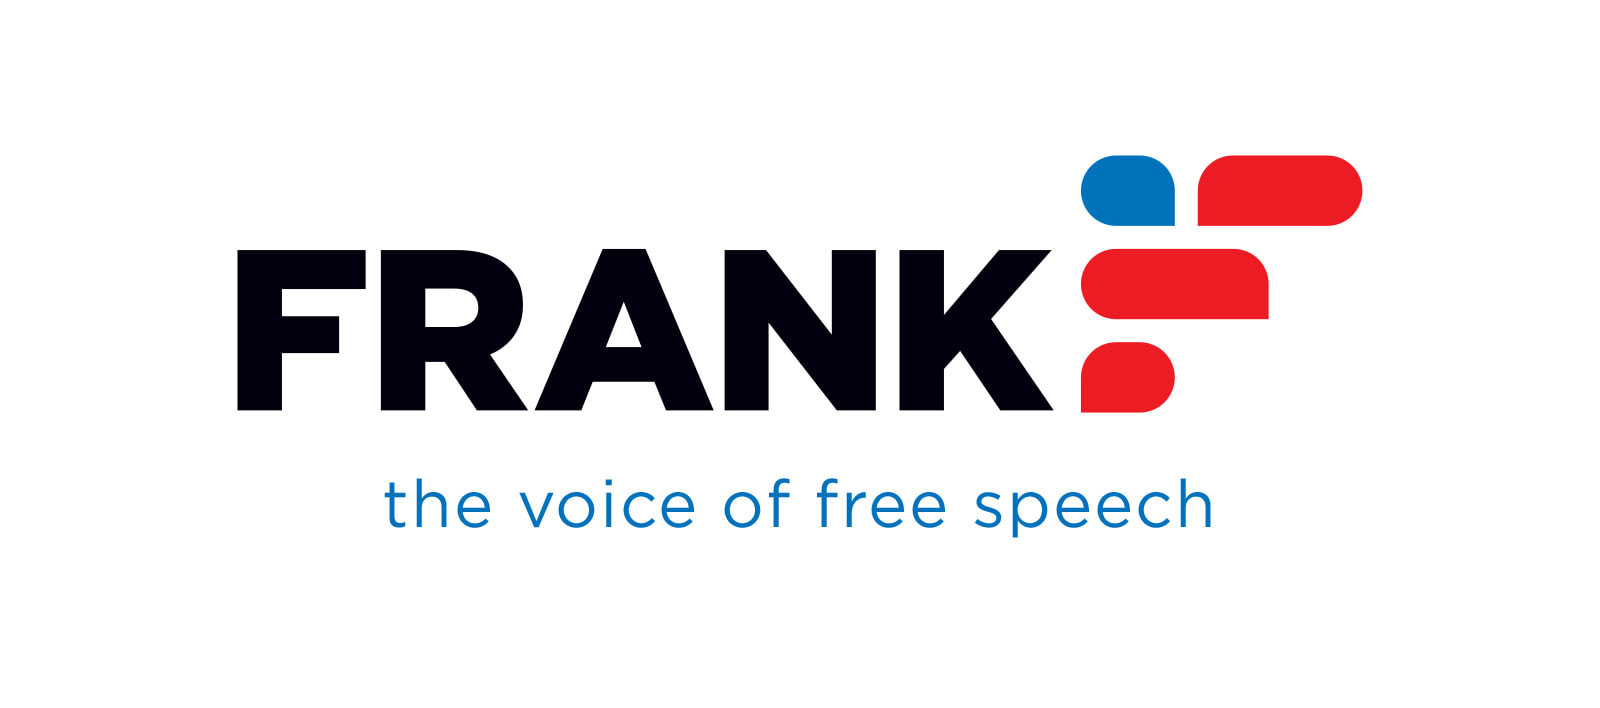 Frank Speech logo mike lindell